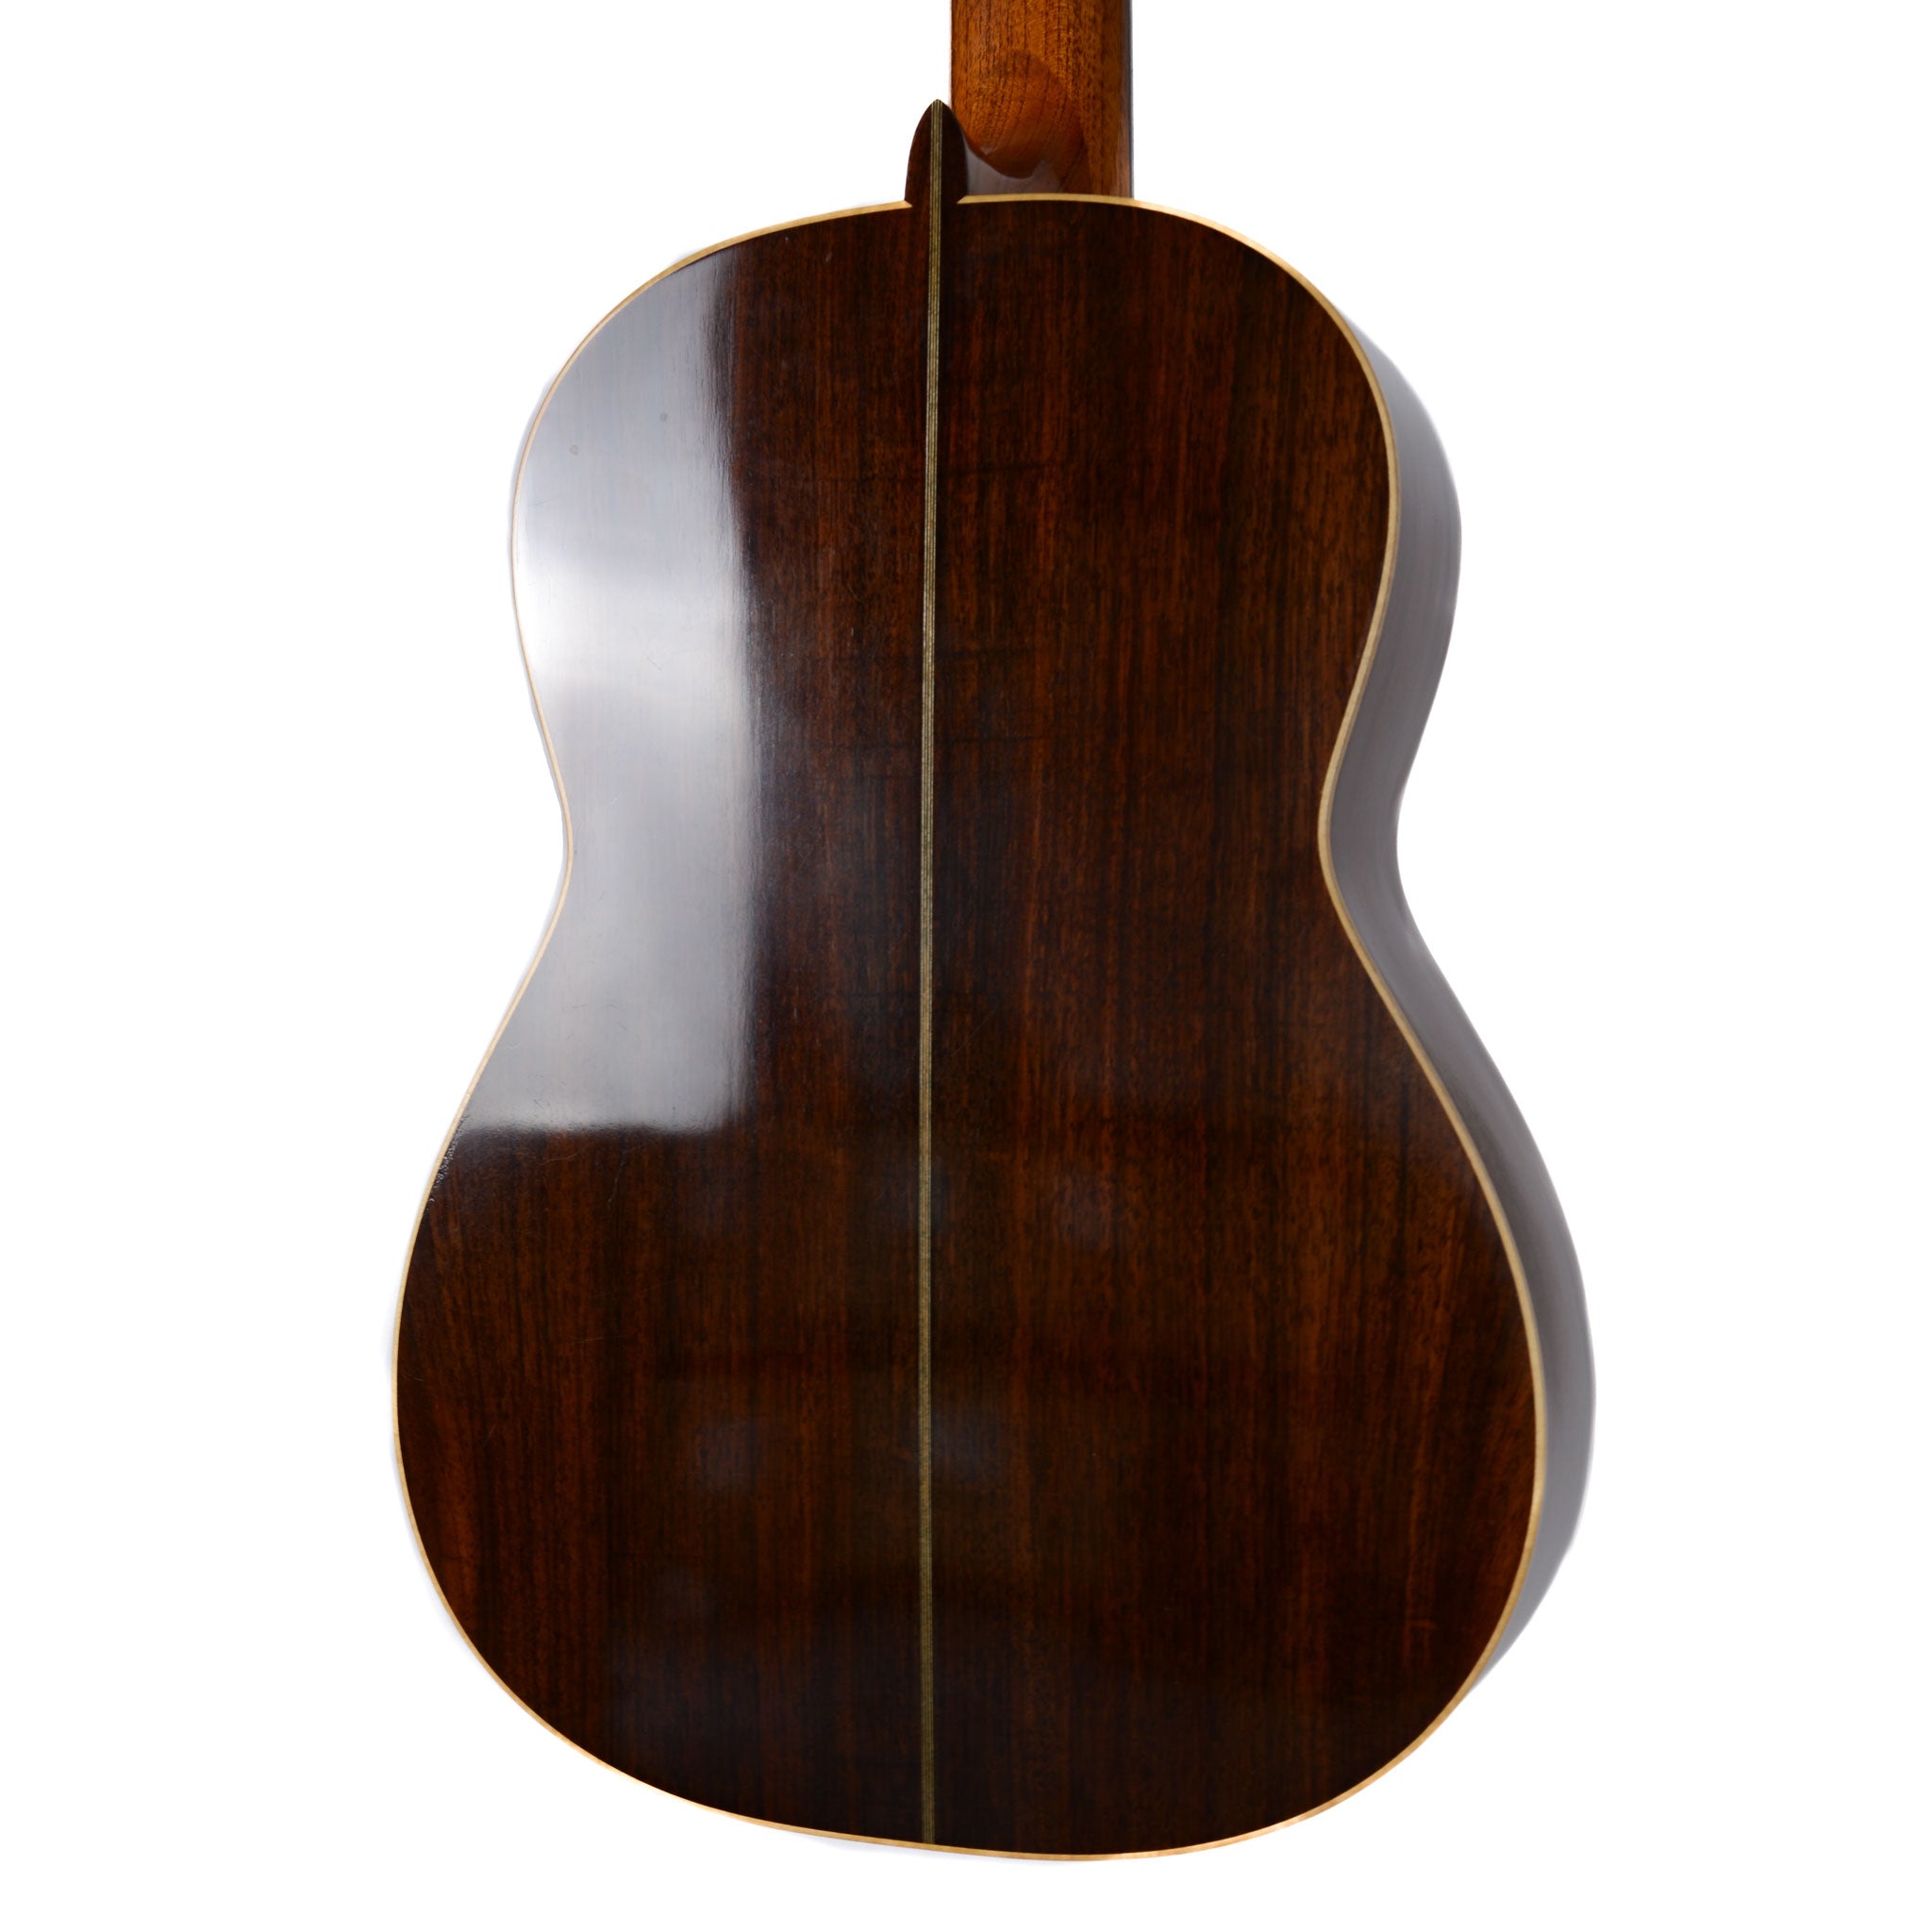 Daniel De Jong Handmade Classical Guitar 2014 - Used